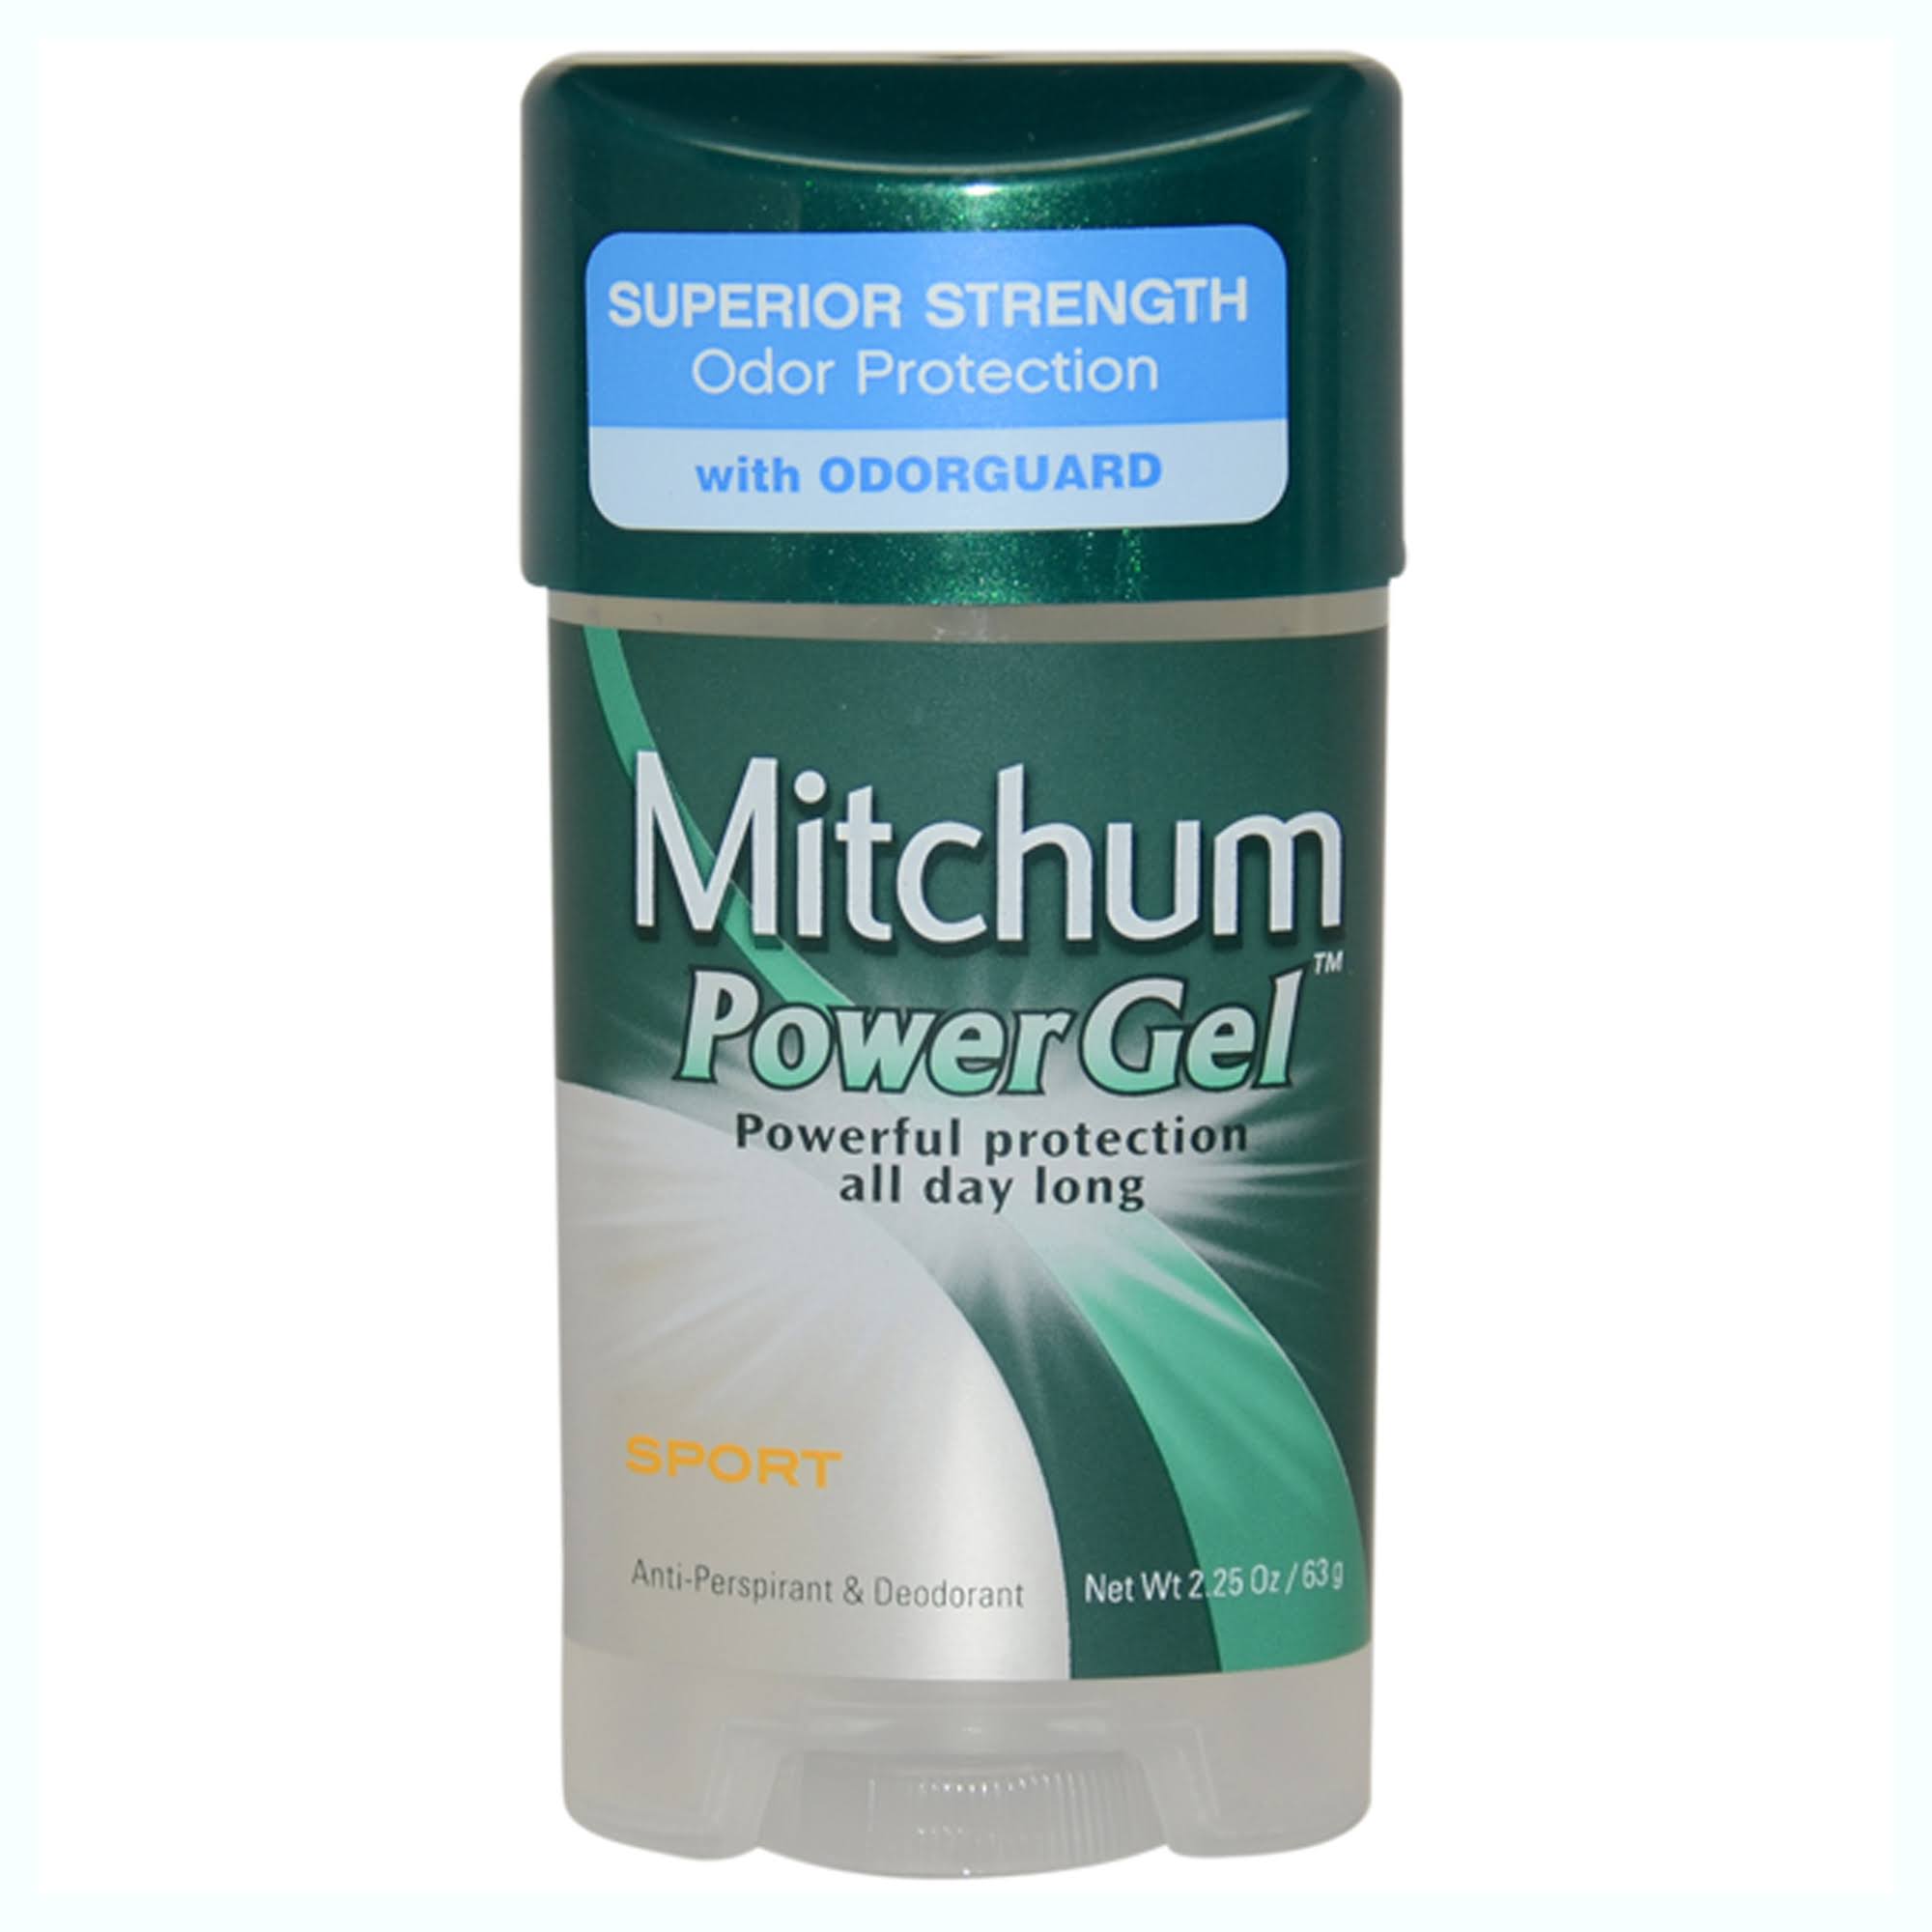 Mitchum Anti-Perspirant and Deodorant - Clear Gel, Sport, 2.25oz